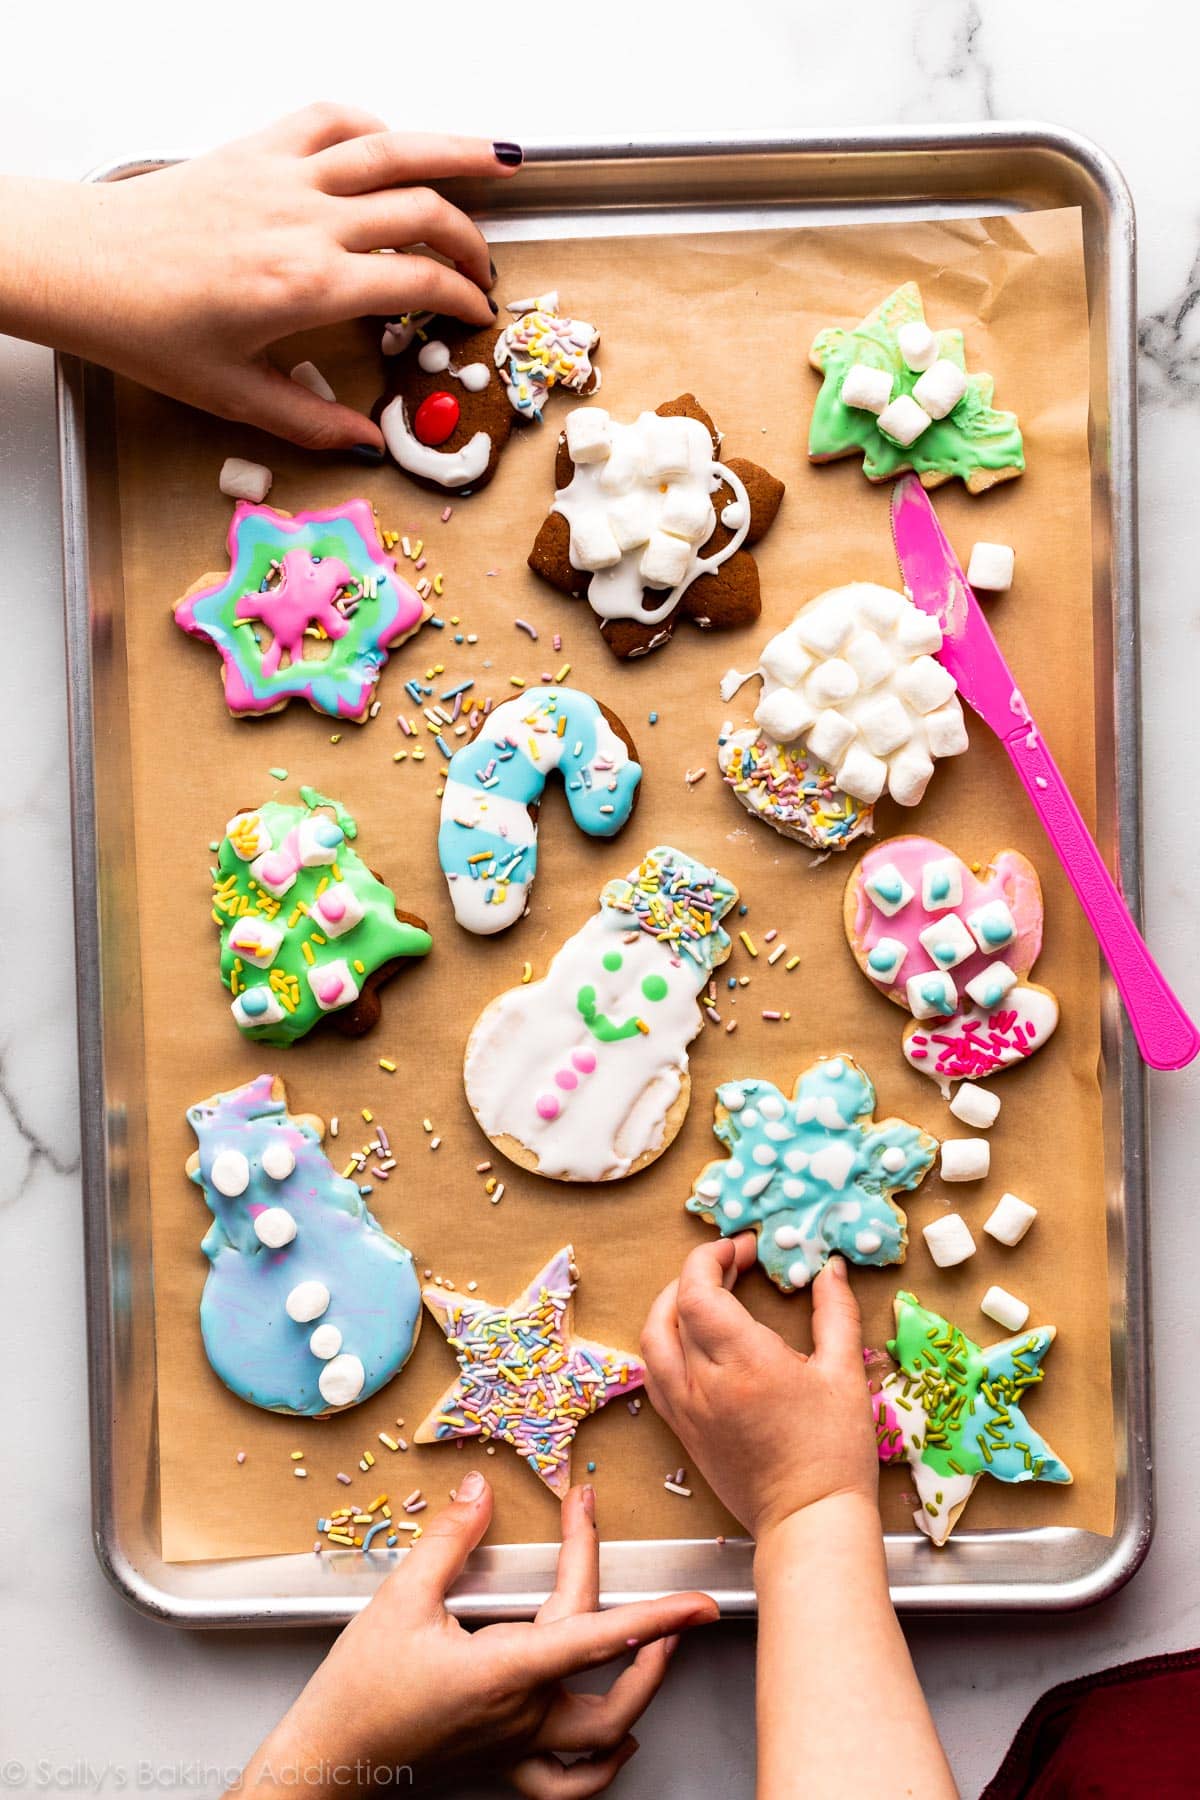 Cookie Decorating Workshop